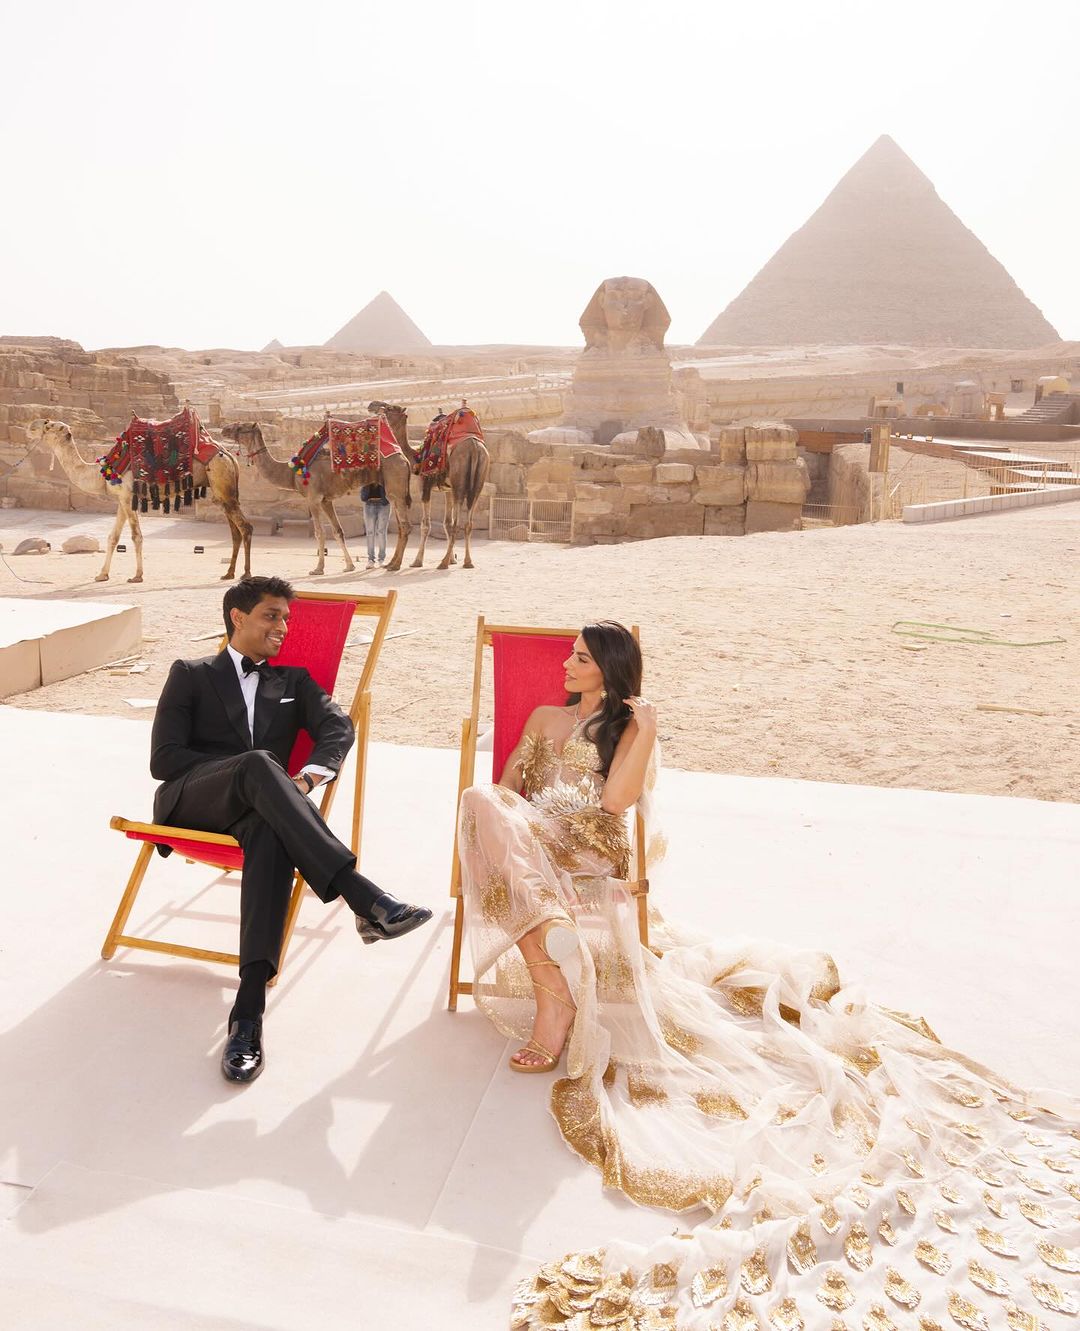 Ankur Jain and Erika Hammond’s wedding celebrations in Egypt